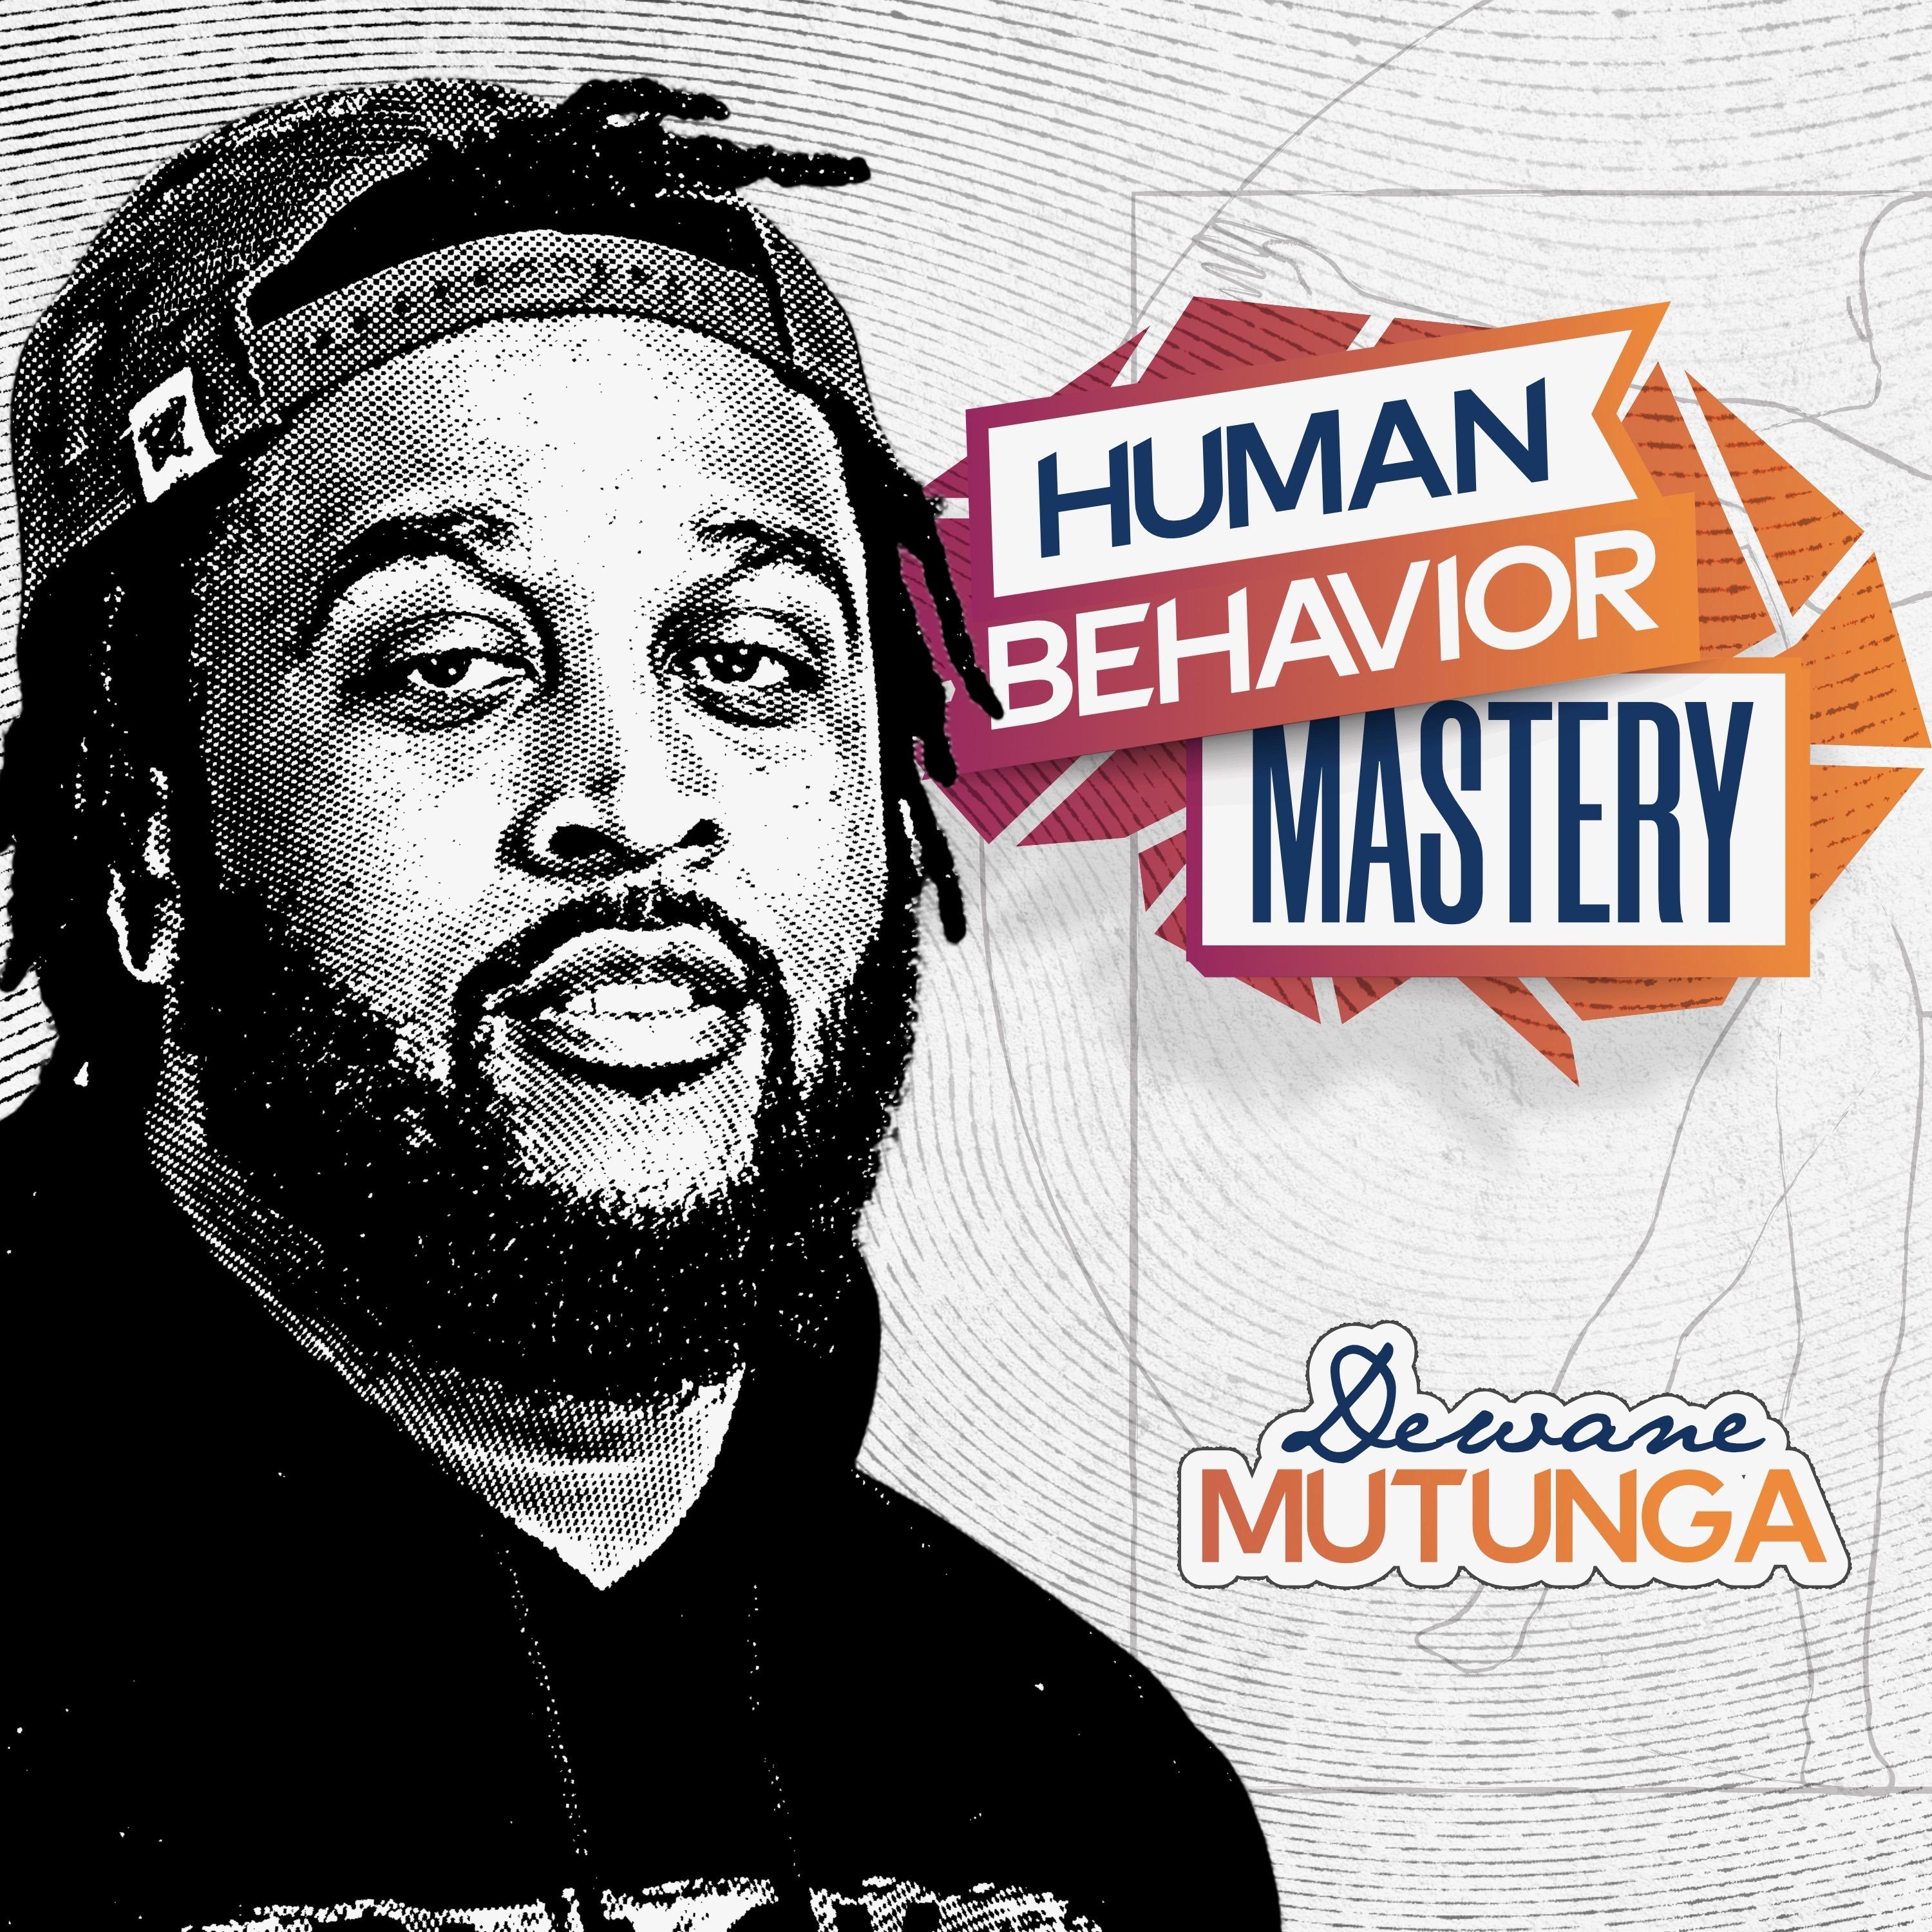 Human Behavior Mastery